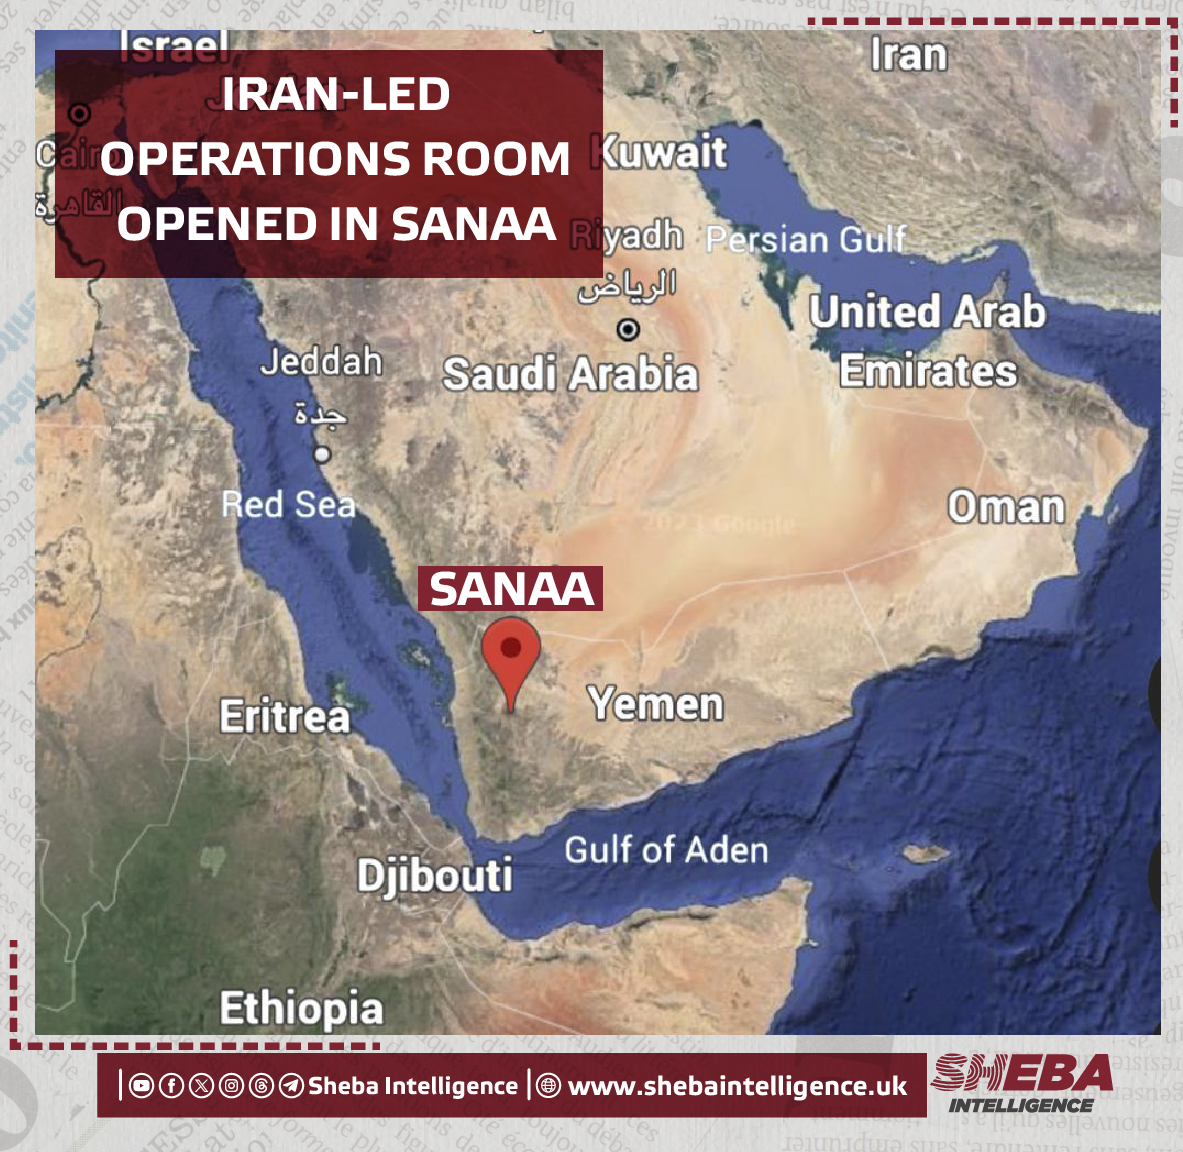 Iran-Led Operations Room Opened in Sanaa